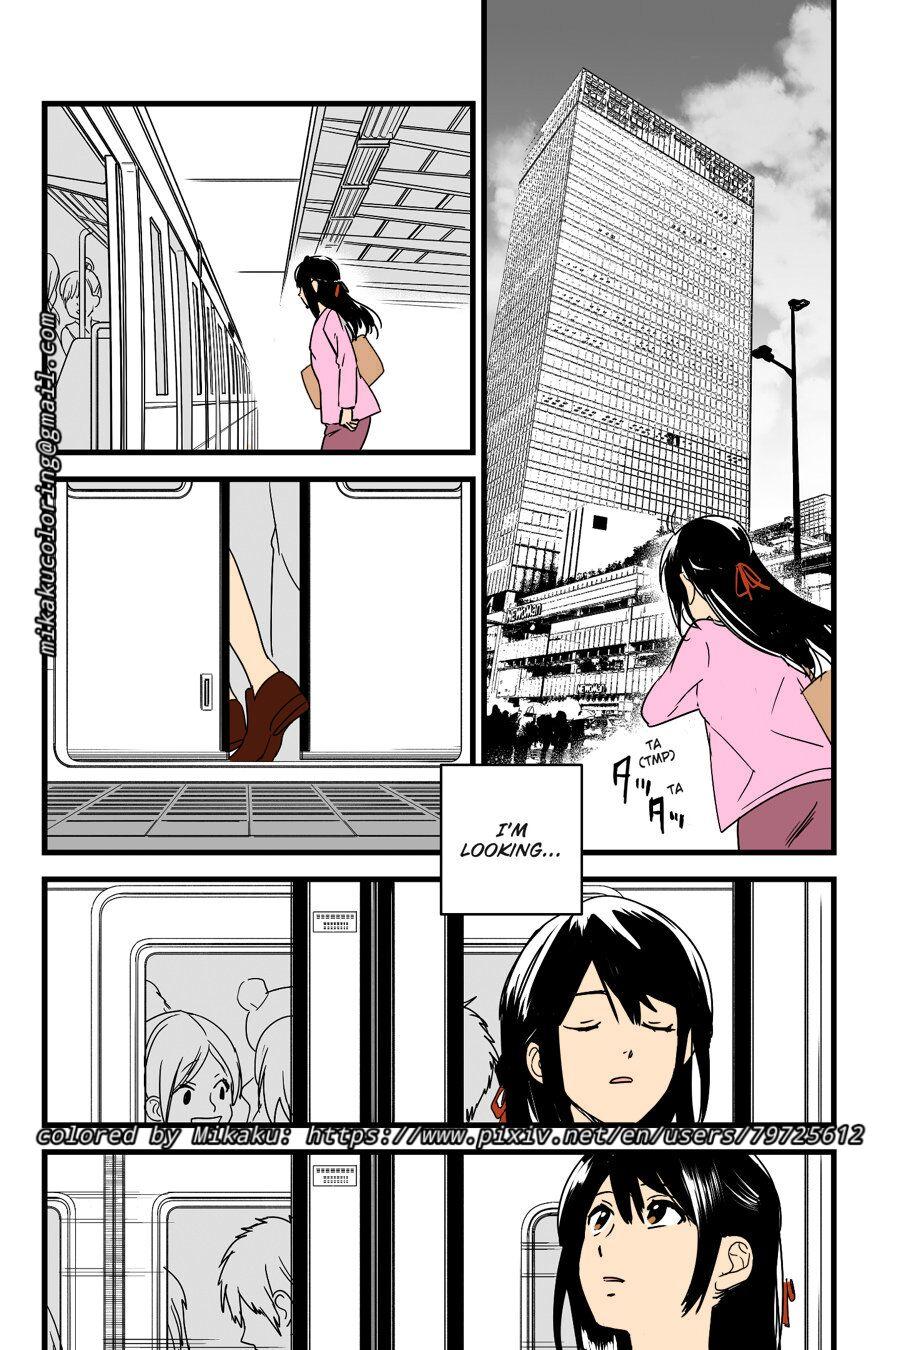 Misunderstanding Love Hotel Netorare [Arakure] & Kimi no na wa: After Story - Mitsuha ~Netorare~ [Syukurin] (colored by Mikaku) 30